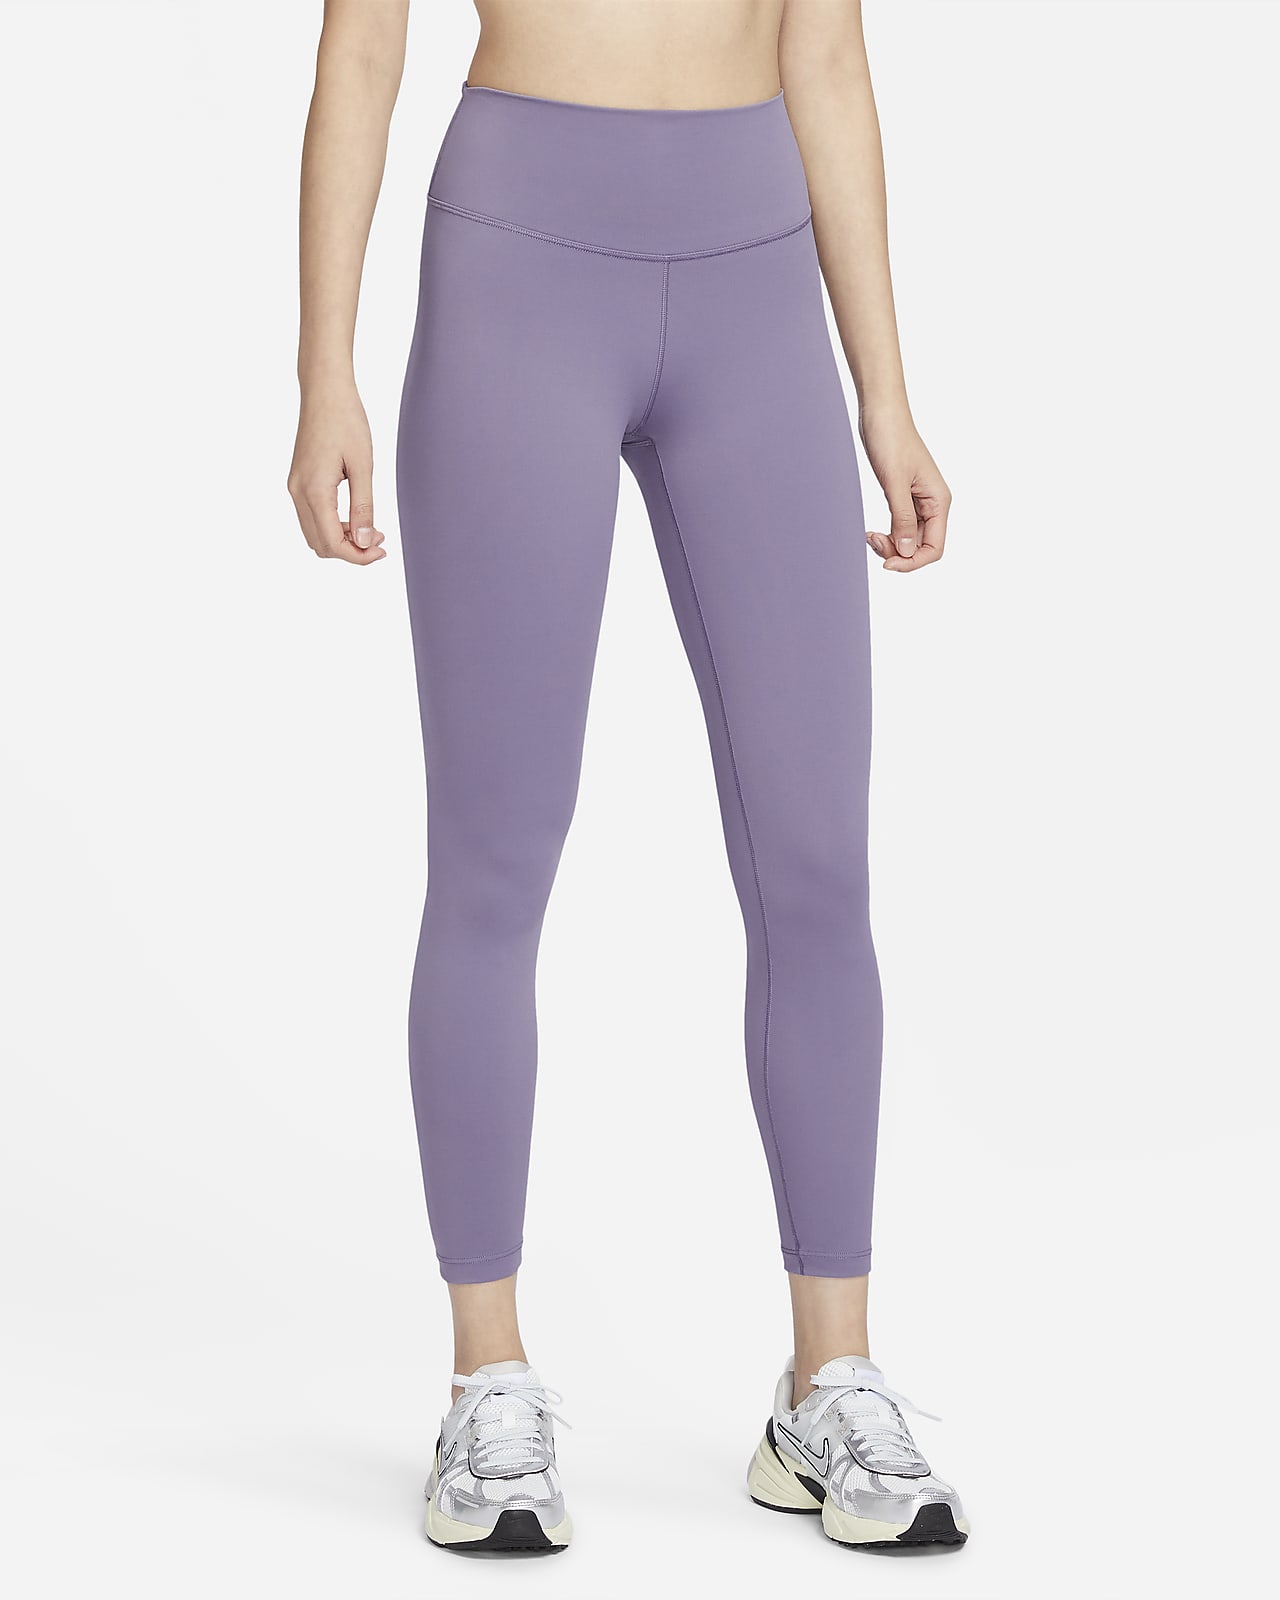 Lululemon Align II Stretchy Yoga Pants - High-Waisted Design, 25